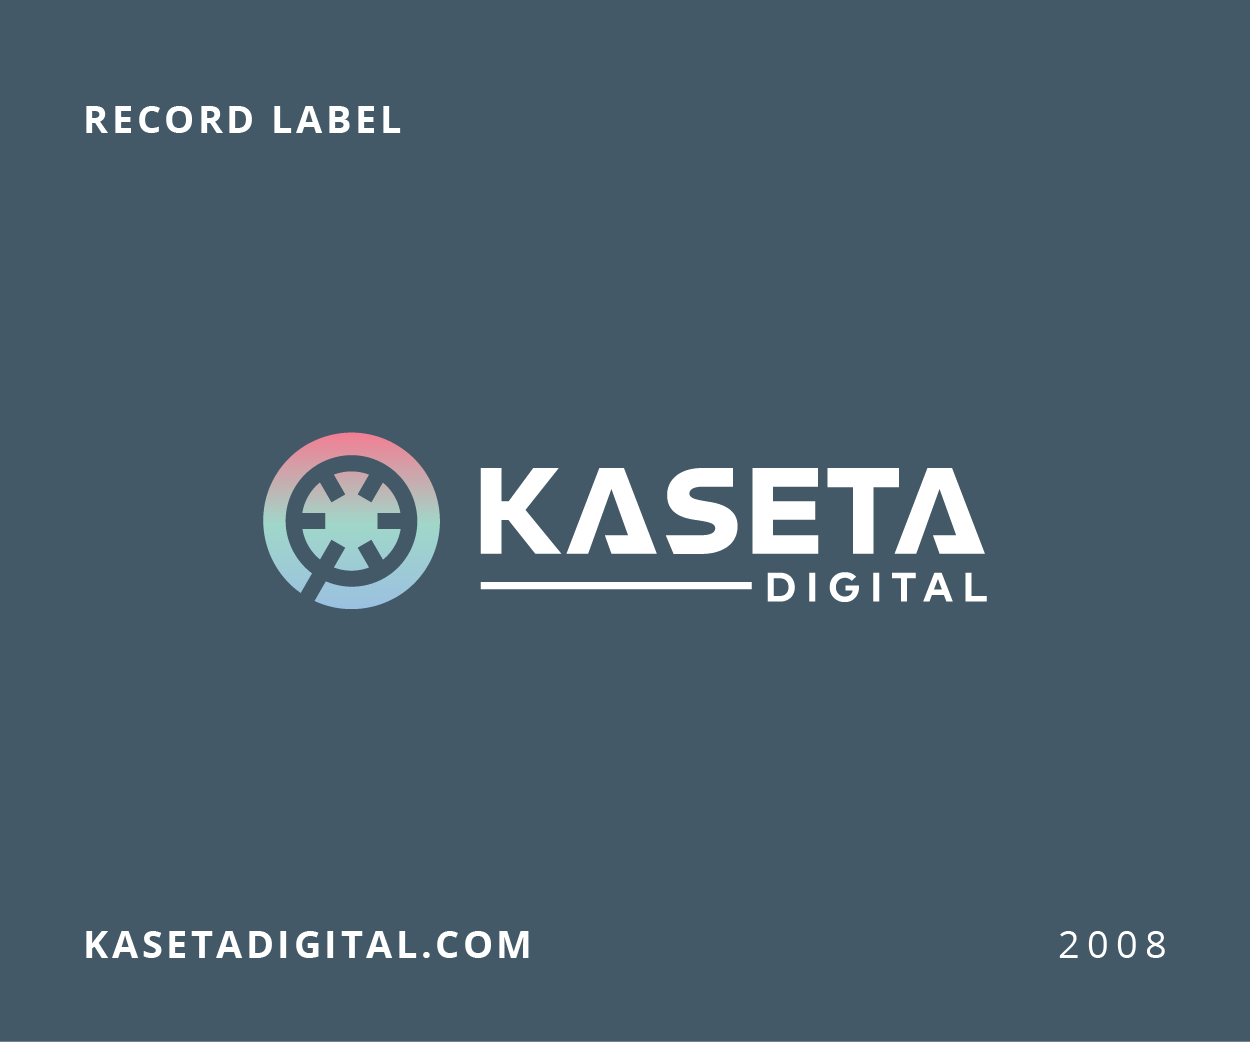 Kaseta Digital - digital distribution of music to stores and streaming/download platforms Logo Design Image